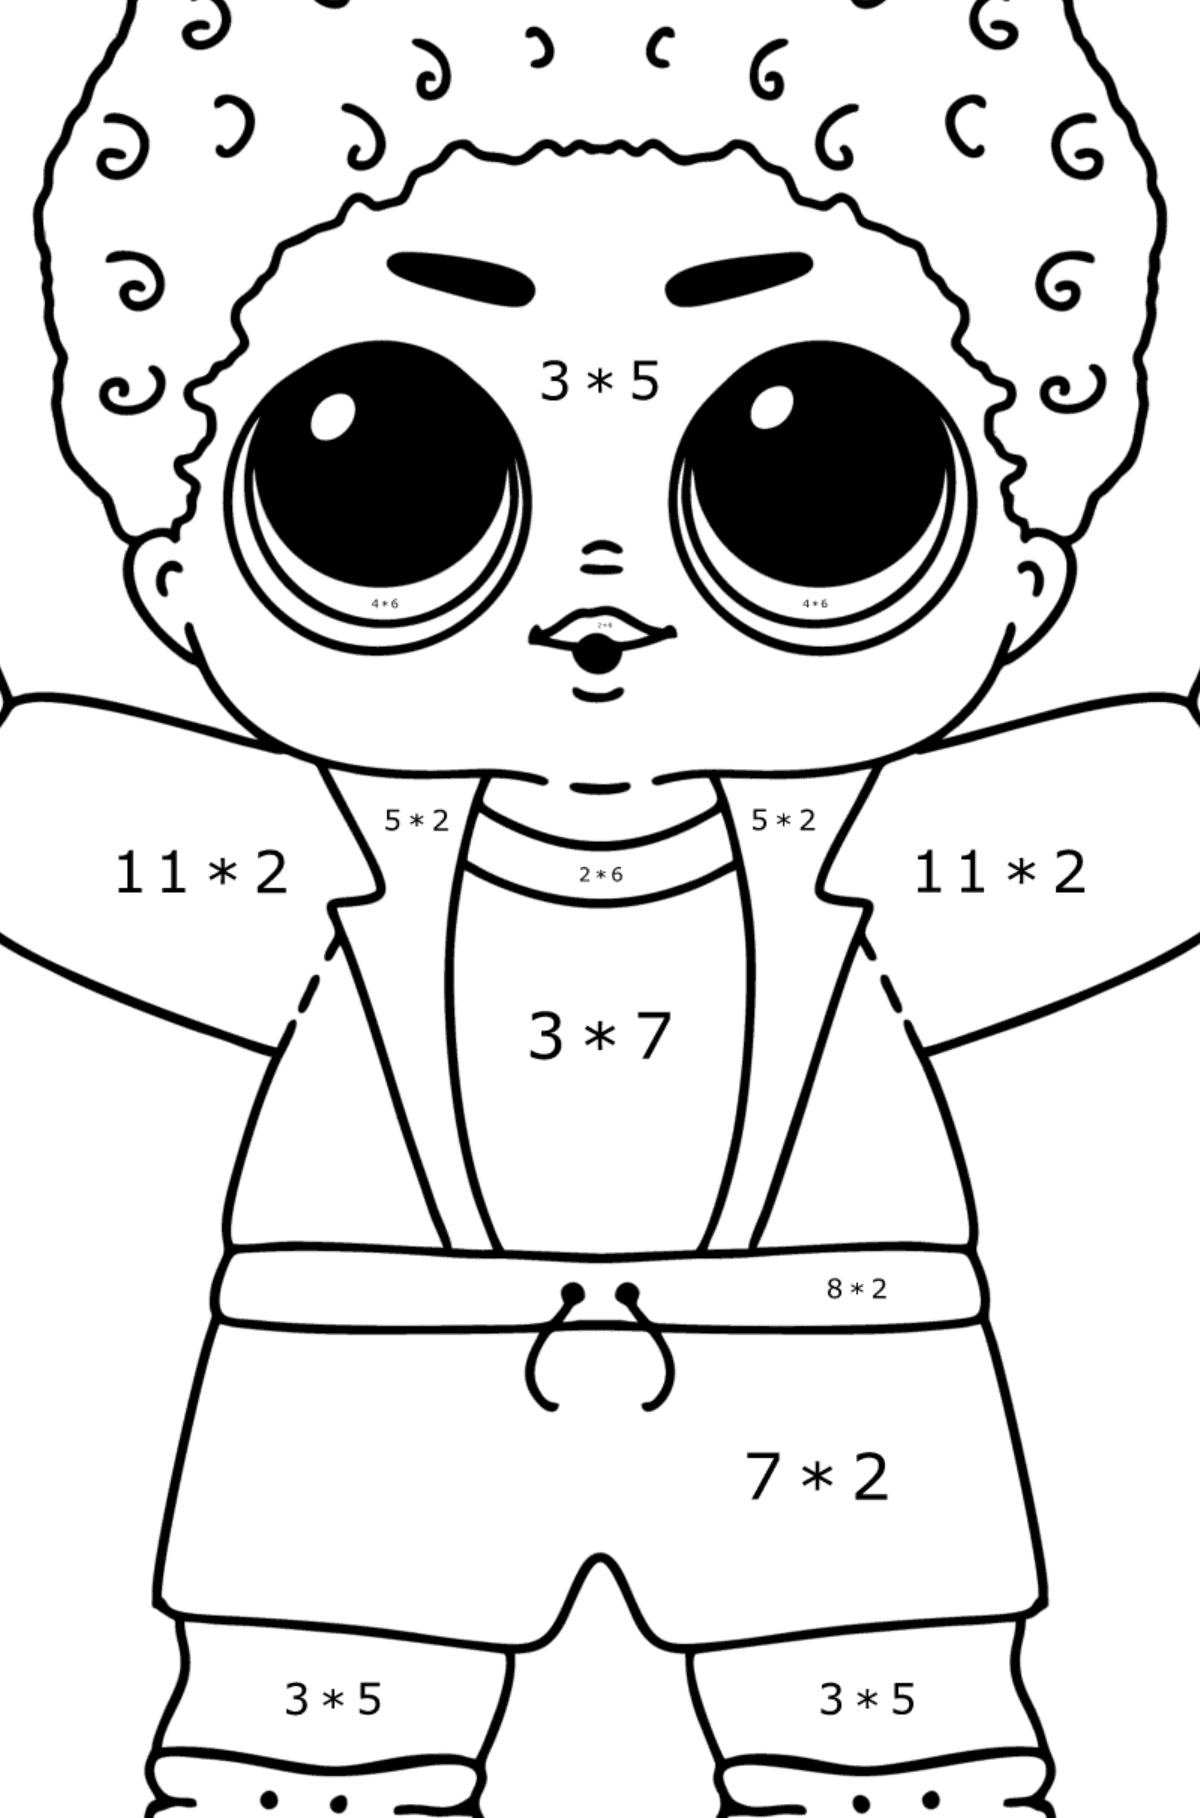 Ausmalbild LOL Junge König (King Bee) - Mathe Ausmalbilder - Multiplikation für Kinder